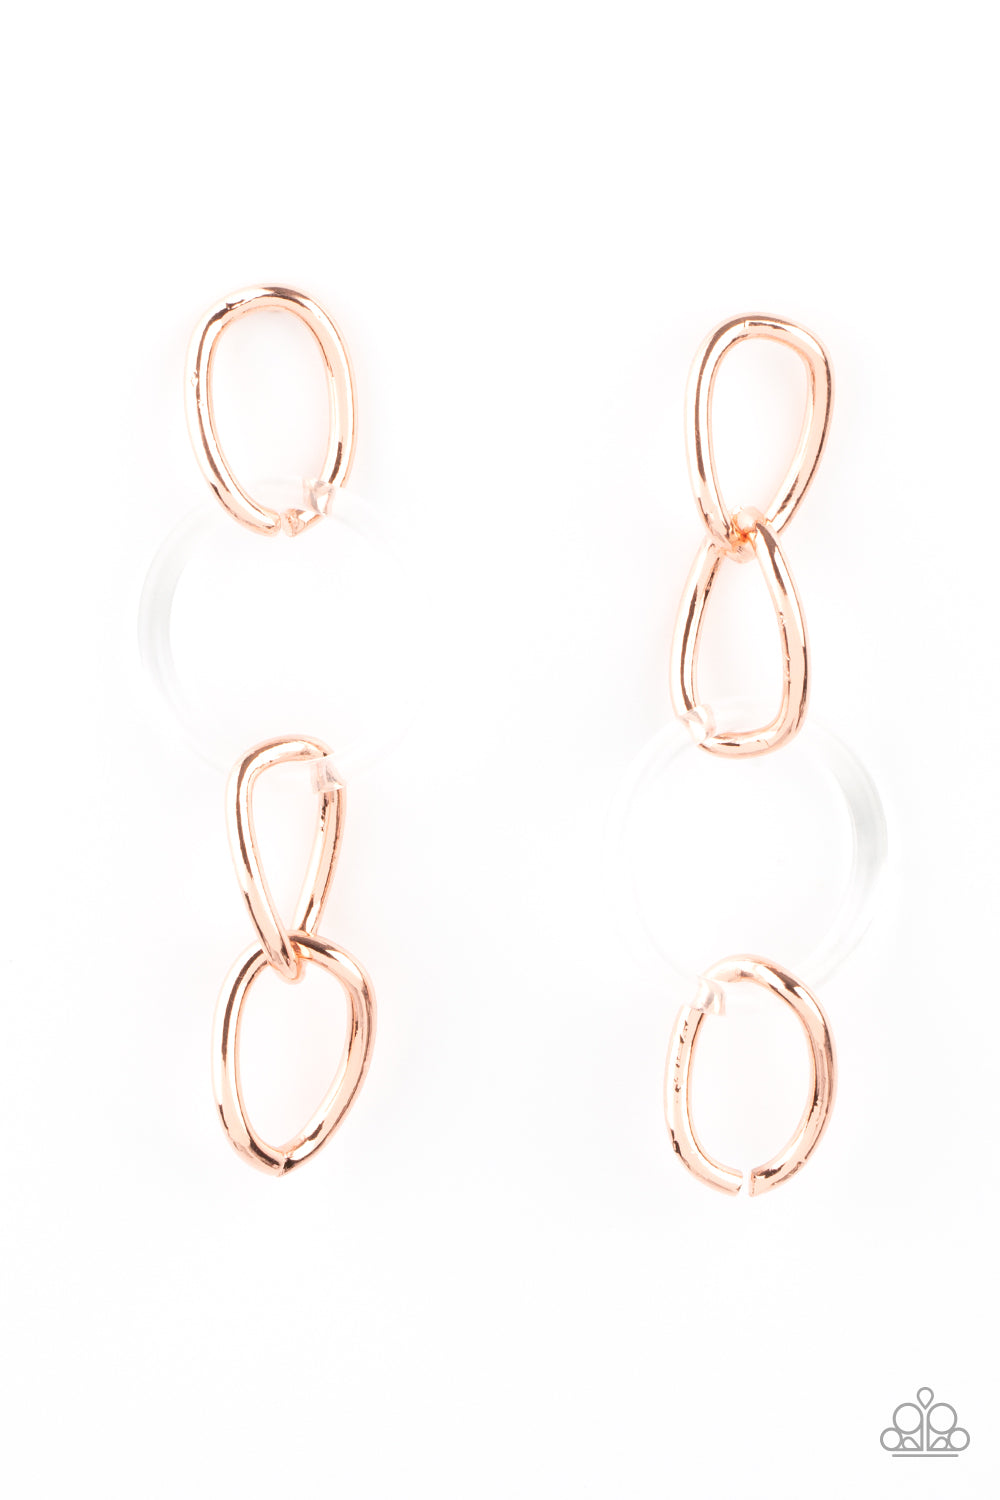 Paparazzi Earrings - Talk in Circles - Copper